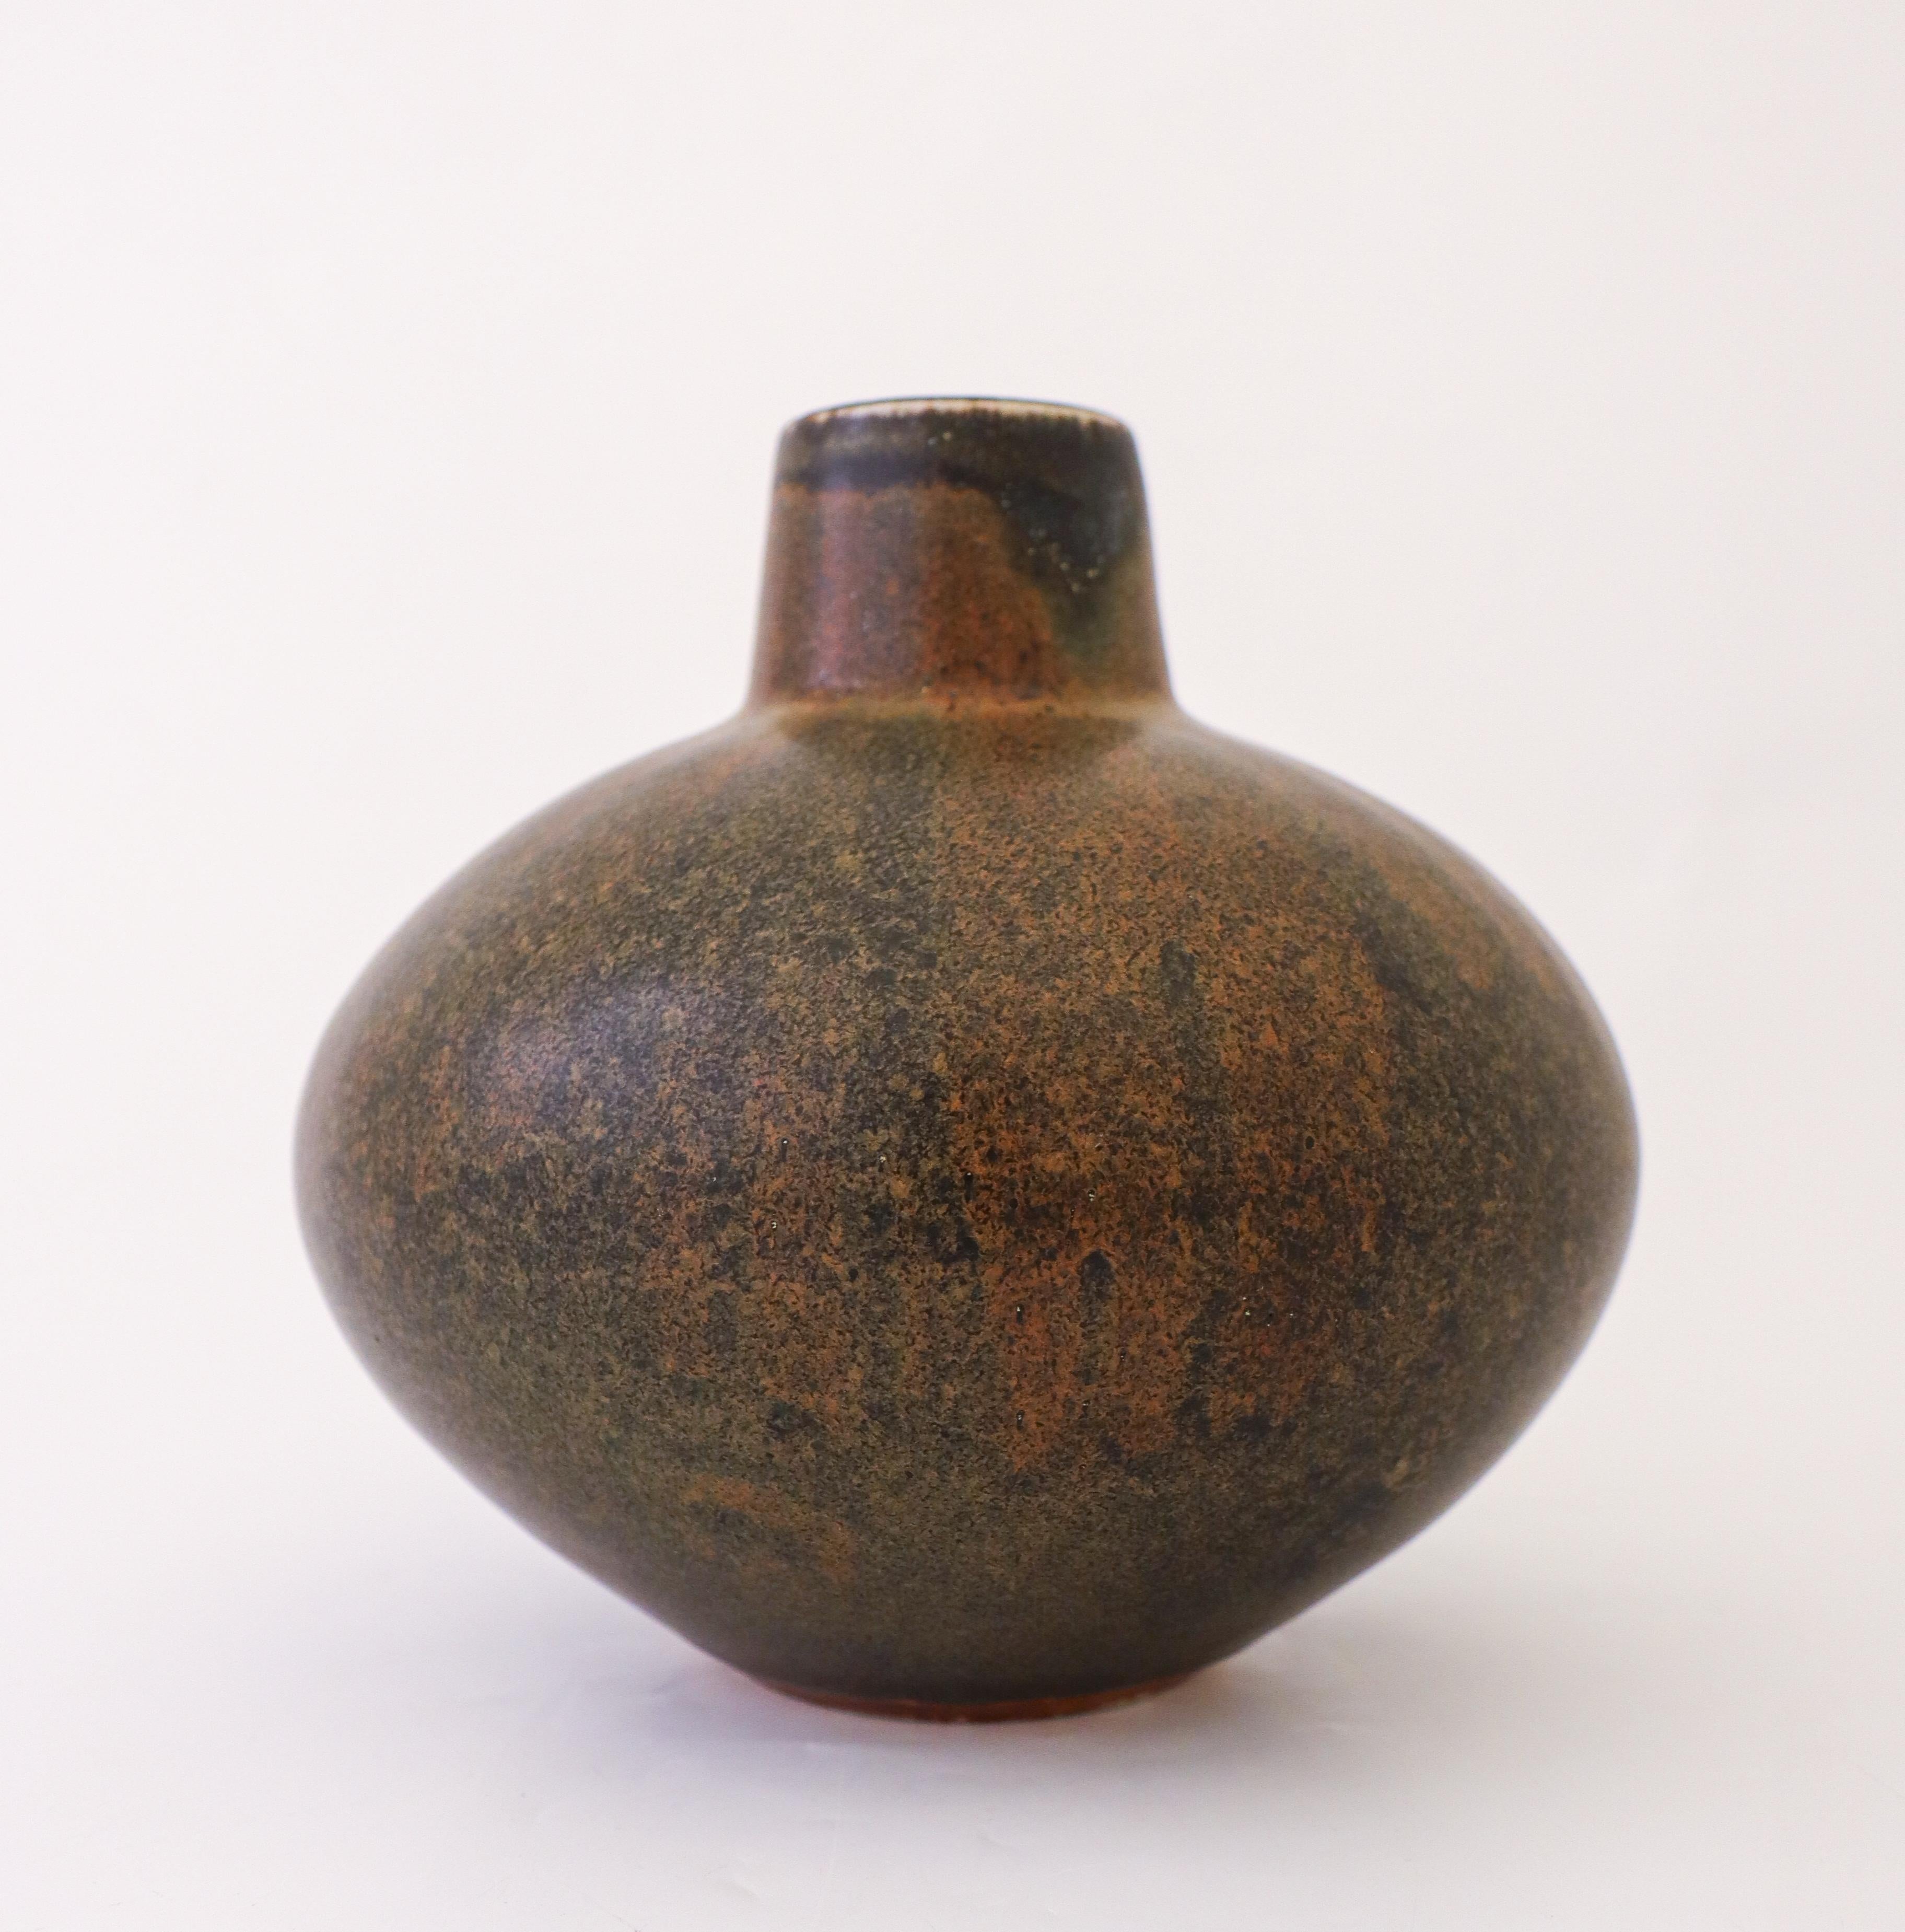 A lovely brown ceramic bowl designed by Carl-Harry Stålhane at Rörstrand atelier. The vase is 18.5 cm (7.4